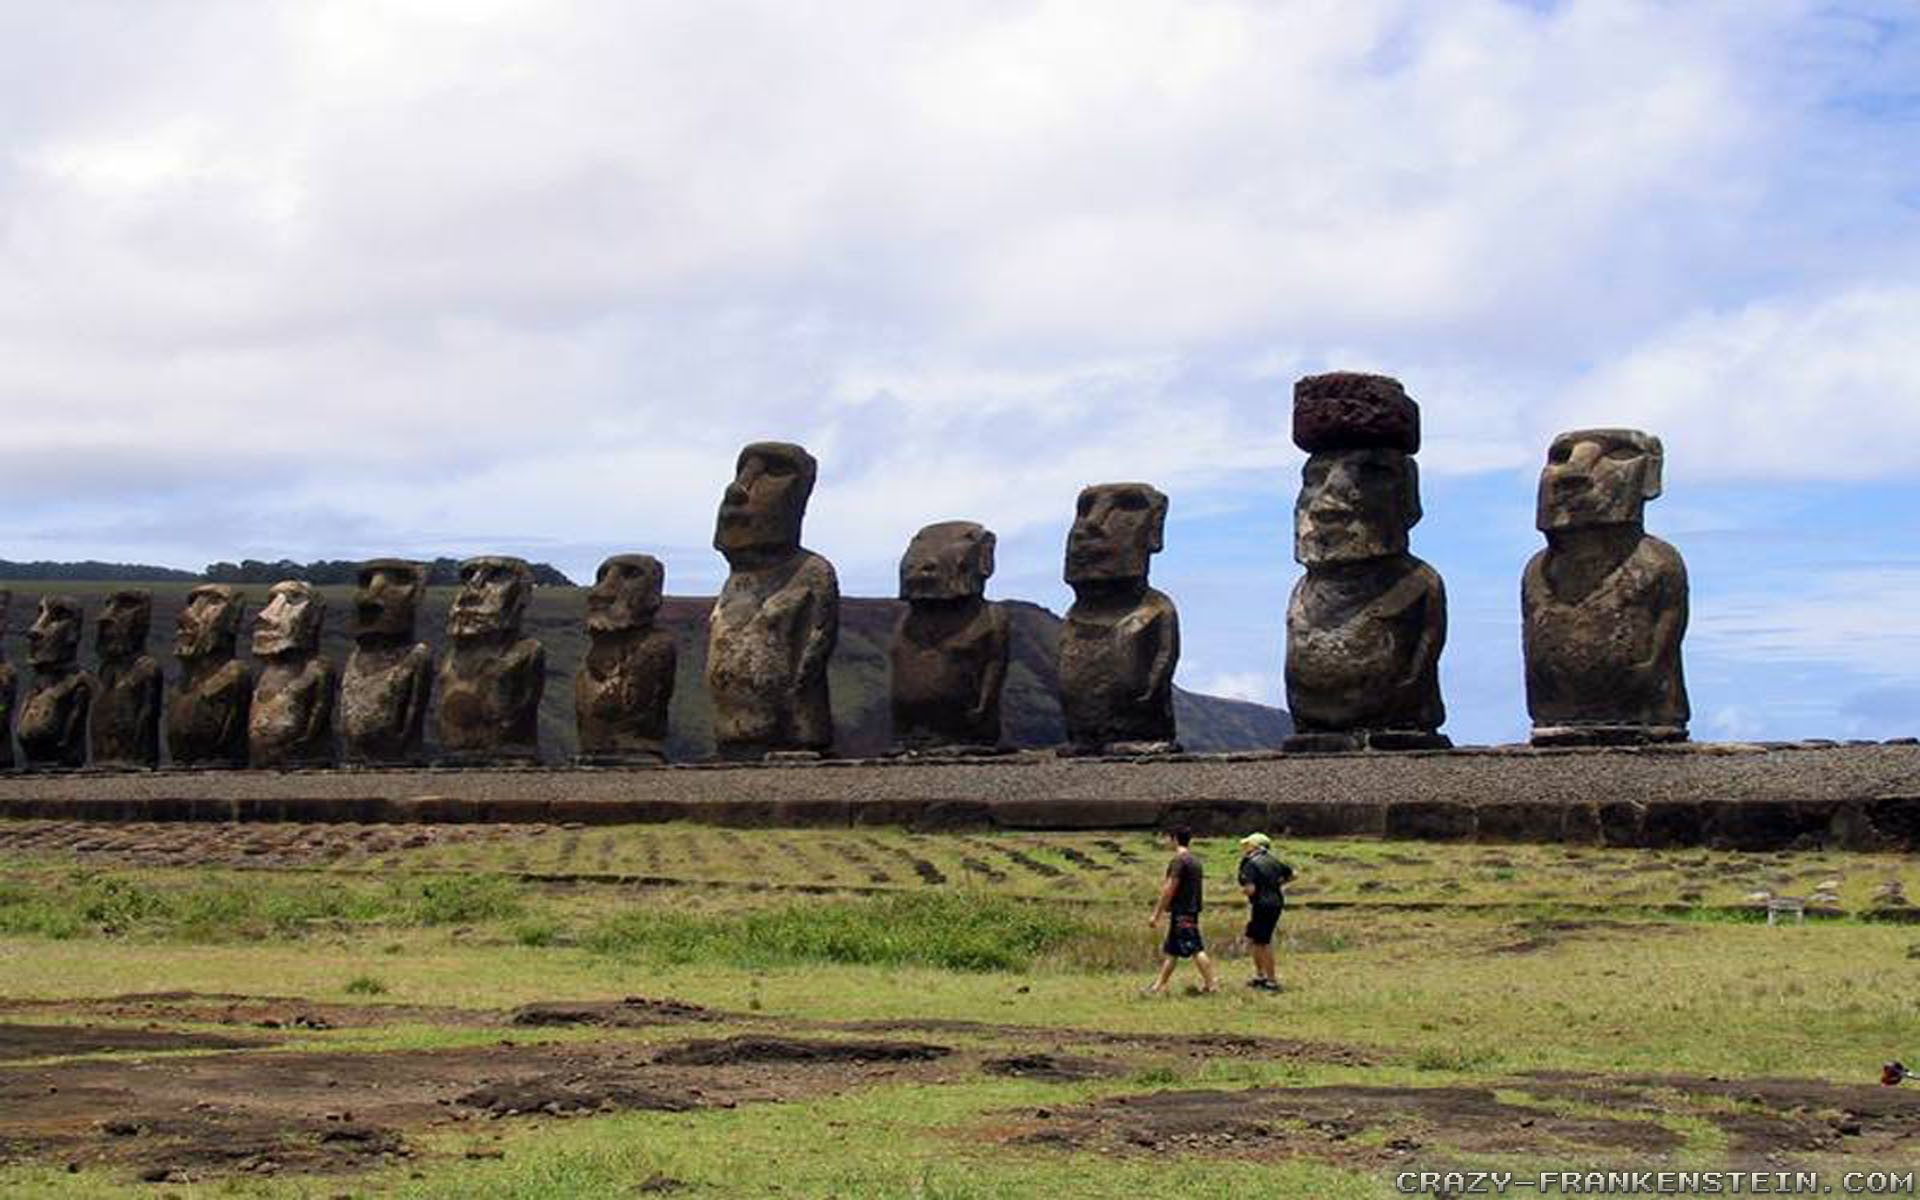 1920x1200 Wallpaper: Wyspa Easter Island Heads Resolution: 1024x768 | 1280x1024 |  1600x1200. Widescreen Res: 1440x900 | 1680x1050 | 